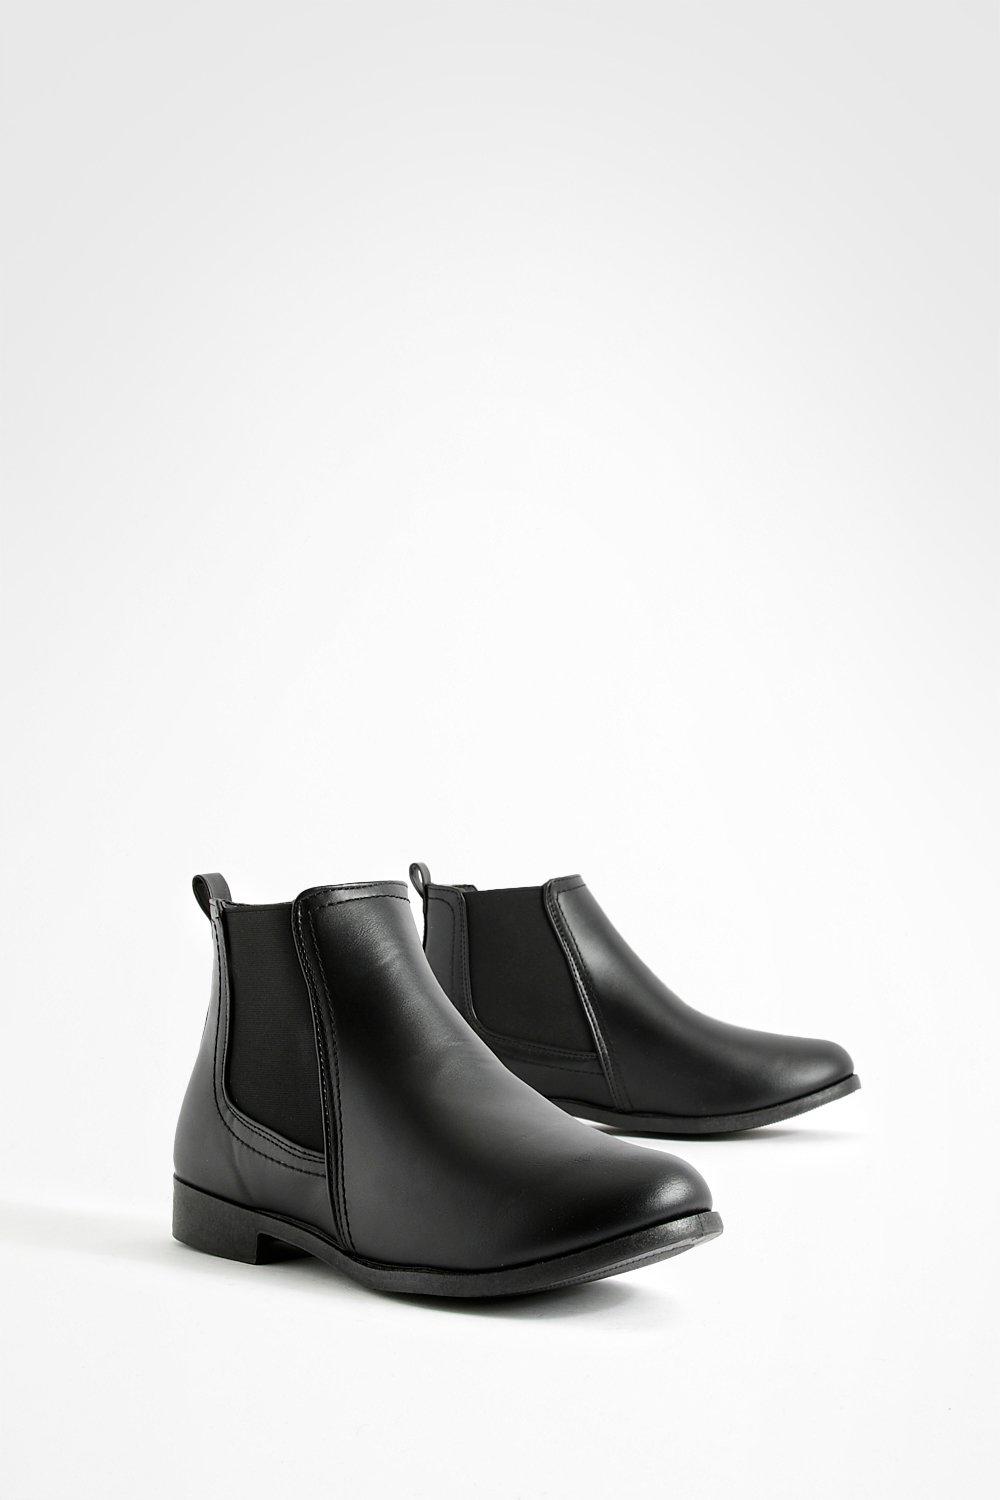 Womens Flat Chelsea Boots - Black - 7, Black